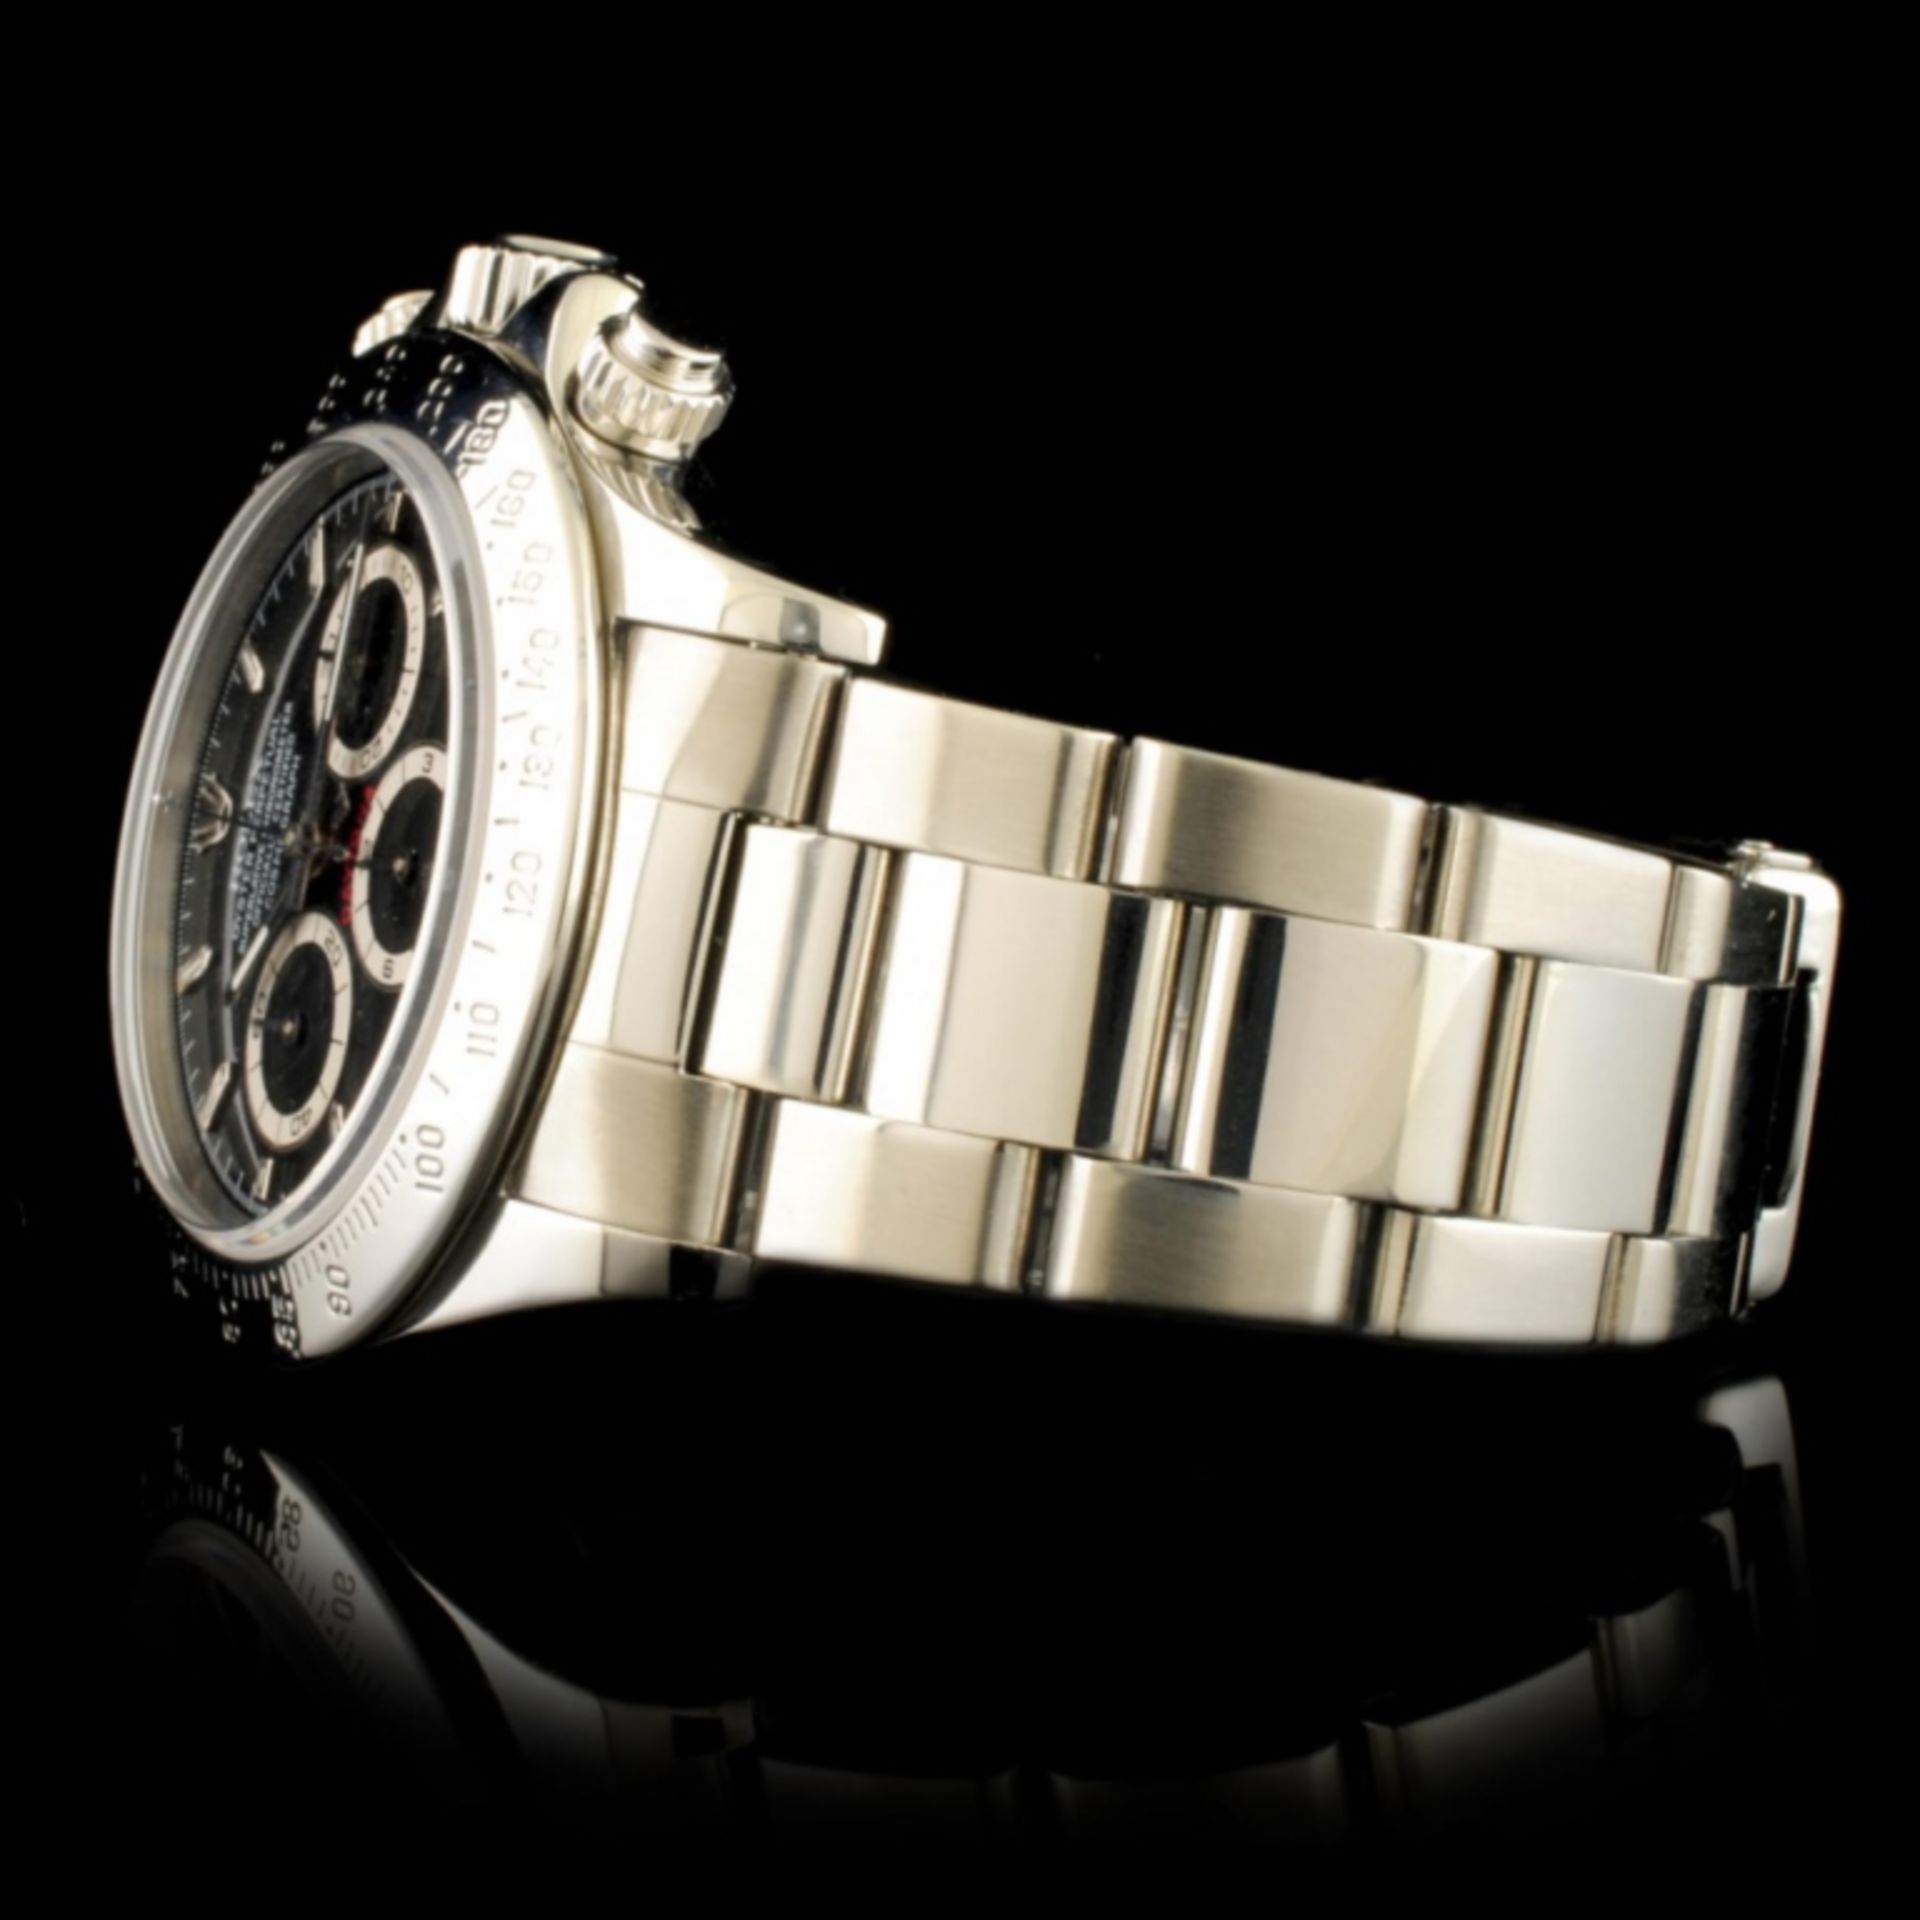 Rolex DAYTONA Cosmograph 16520 40MM Wristwatch - Image 4 of 9